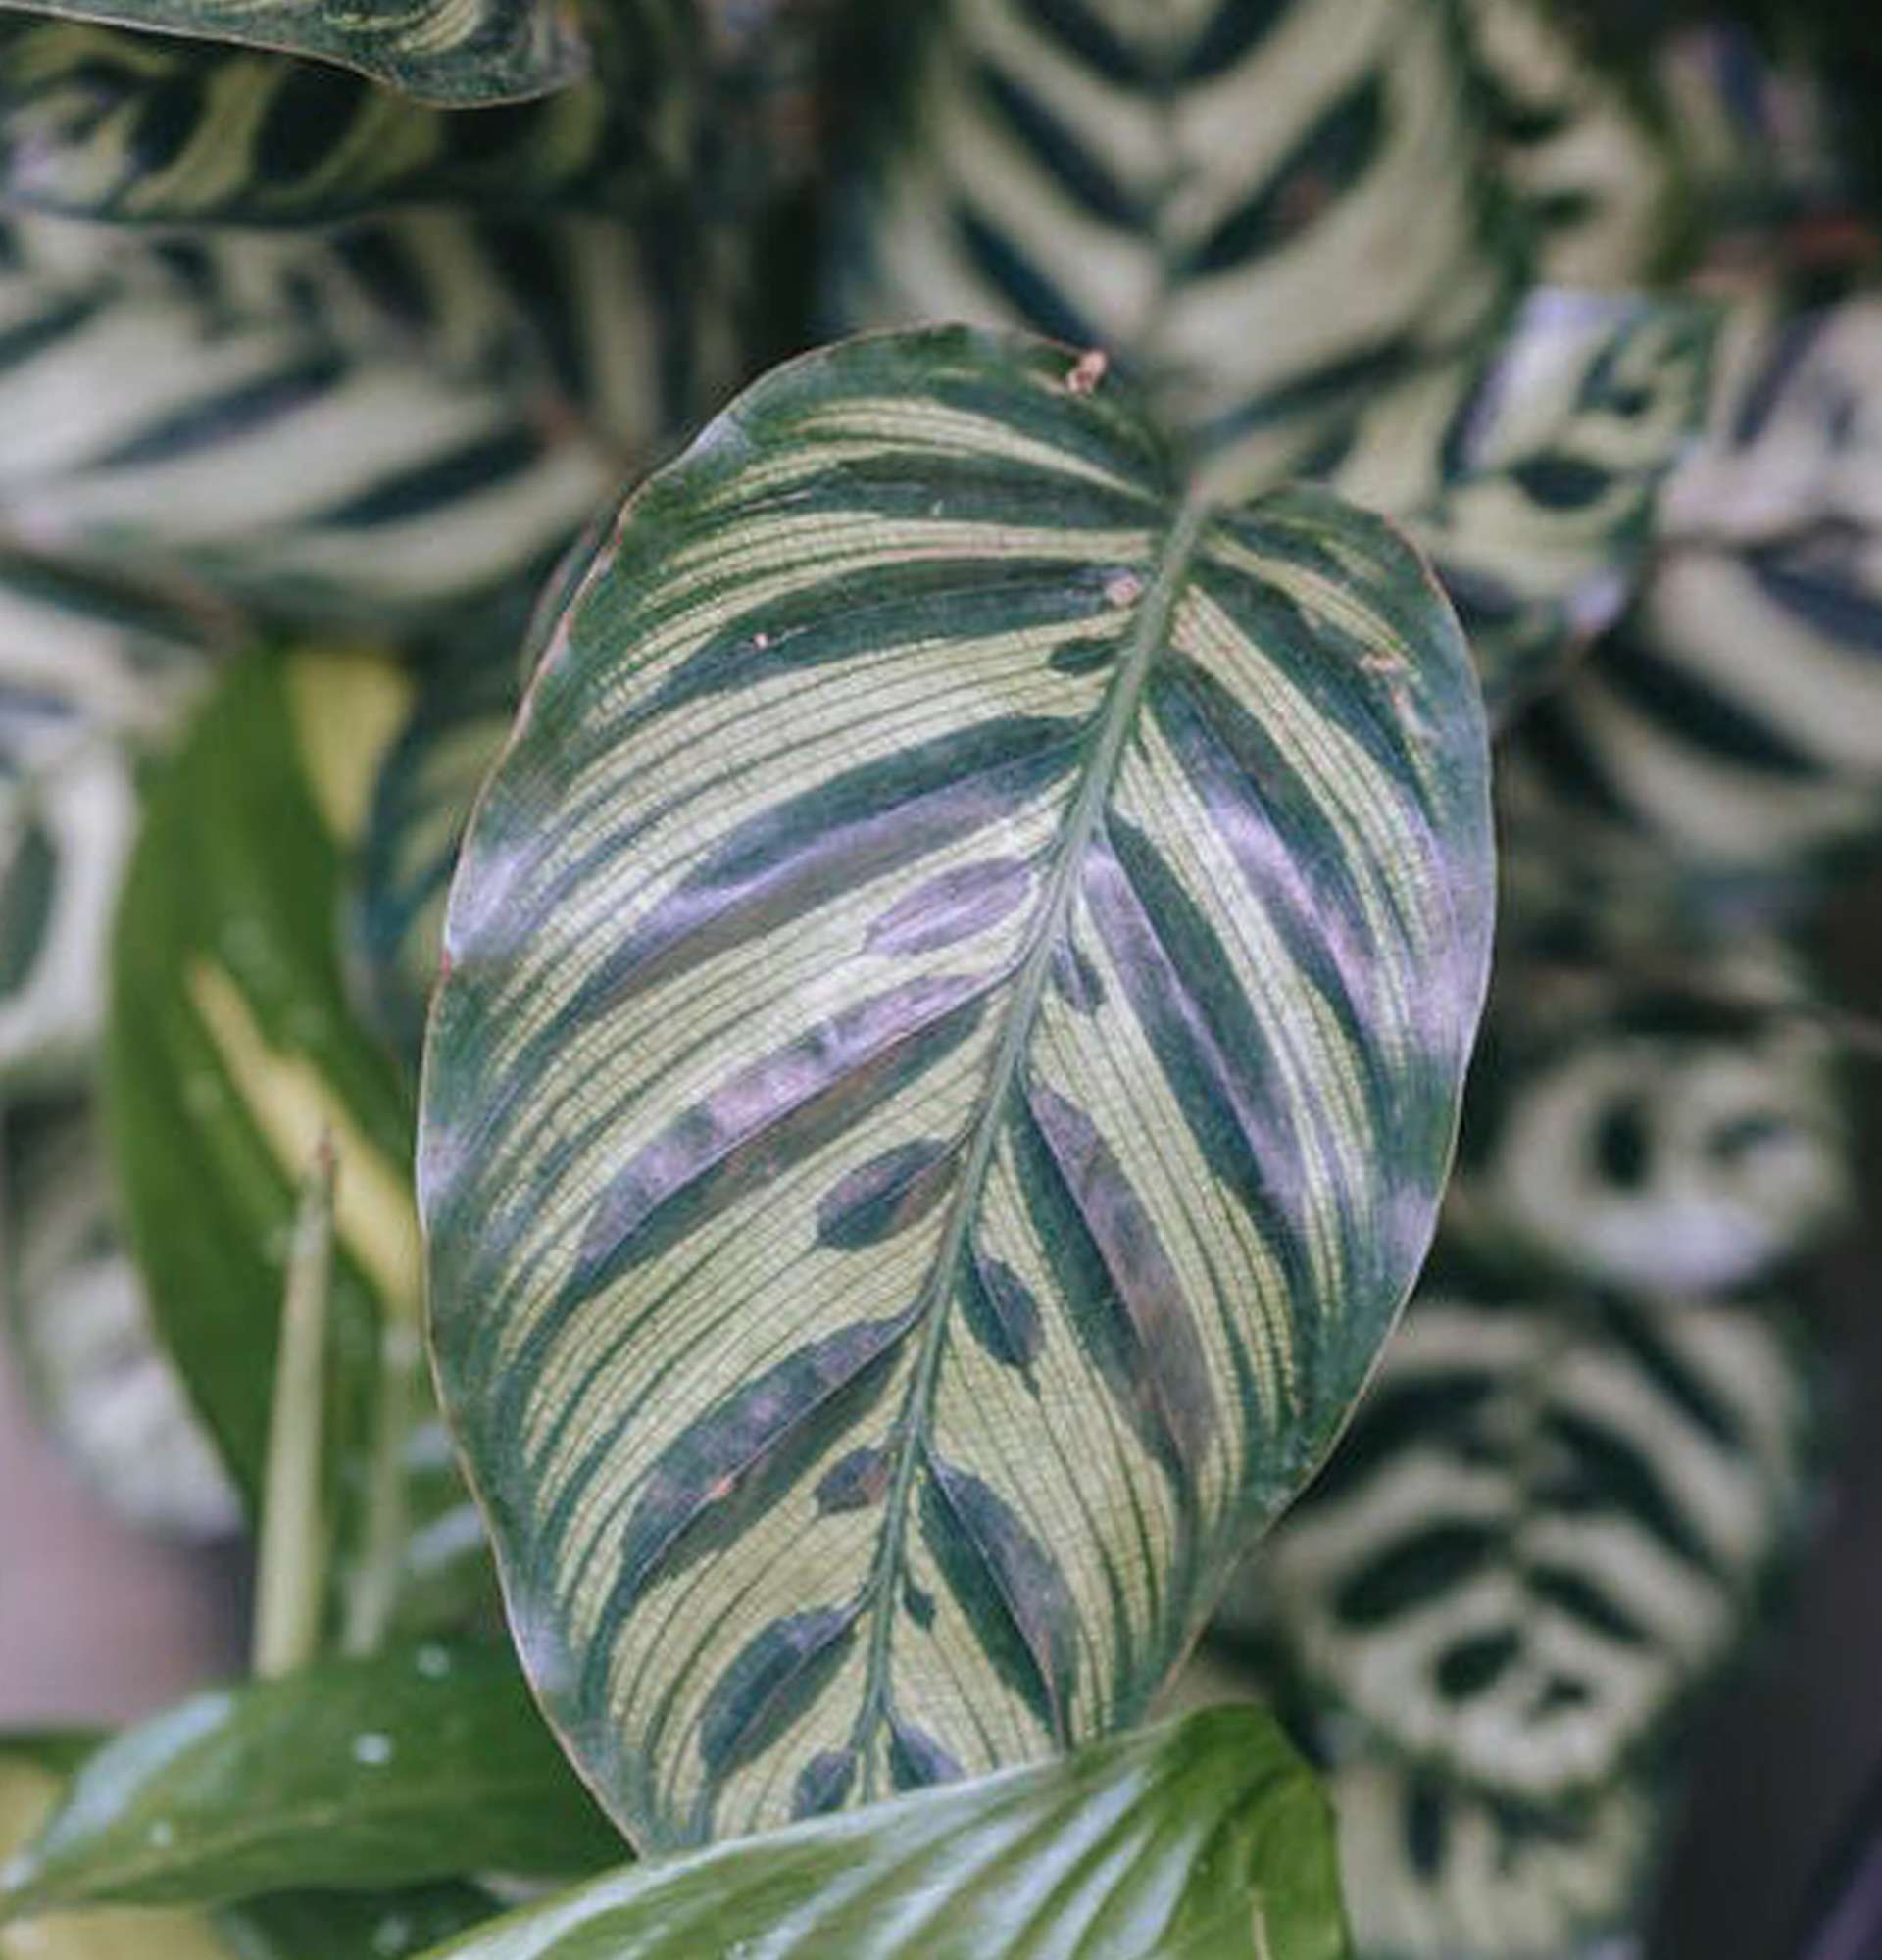  ктенанте фото - рослина зі смугастим листям